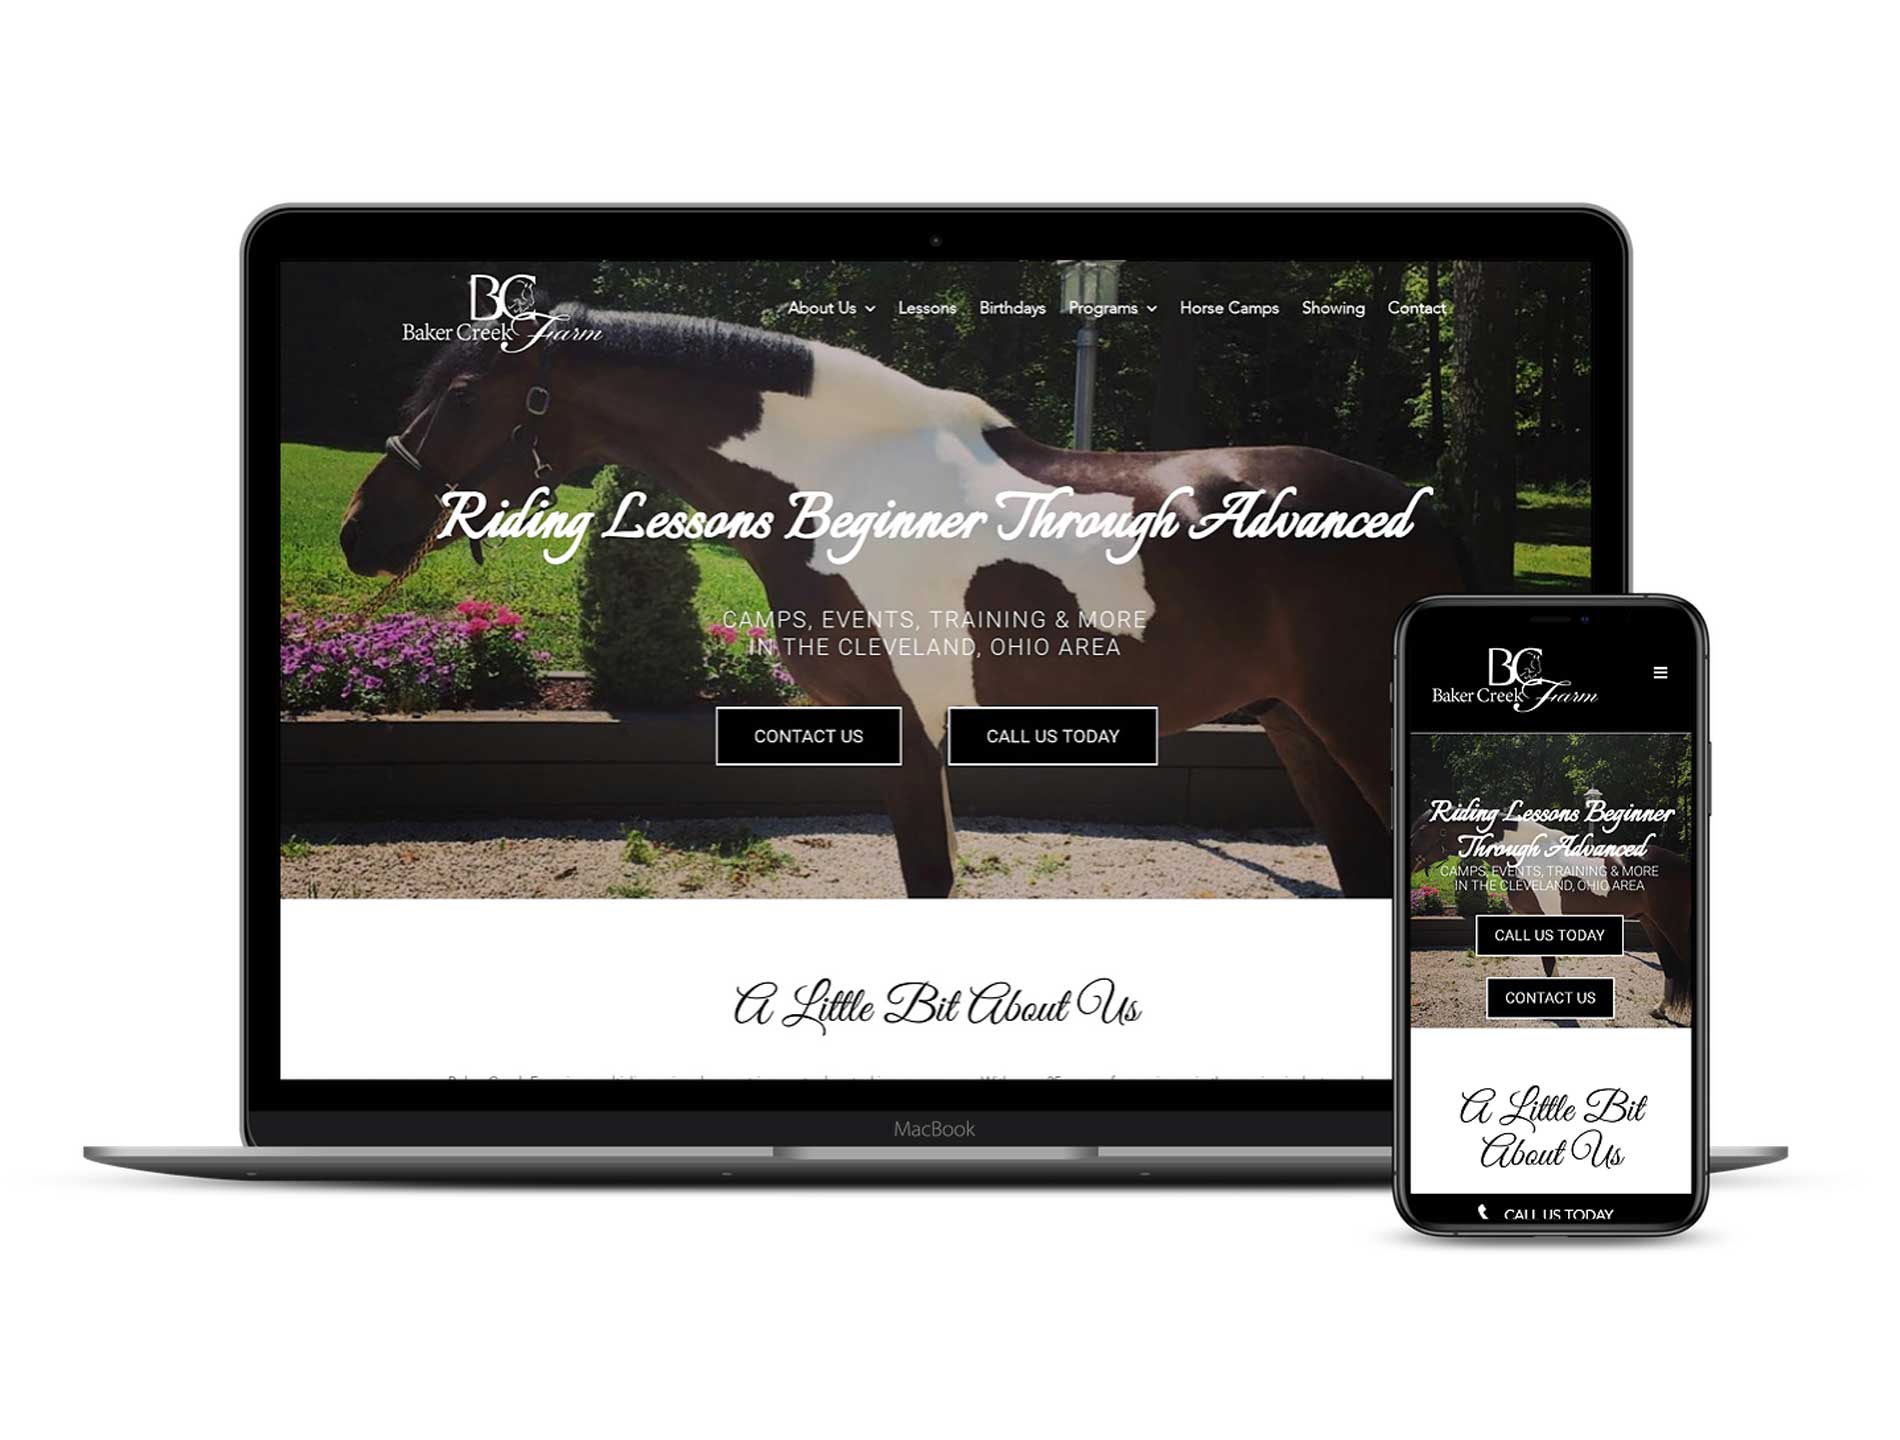 Baker Creek Farm website design and mobile optimization